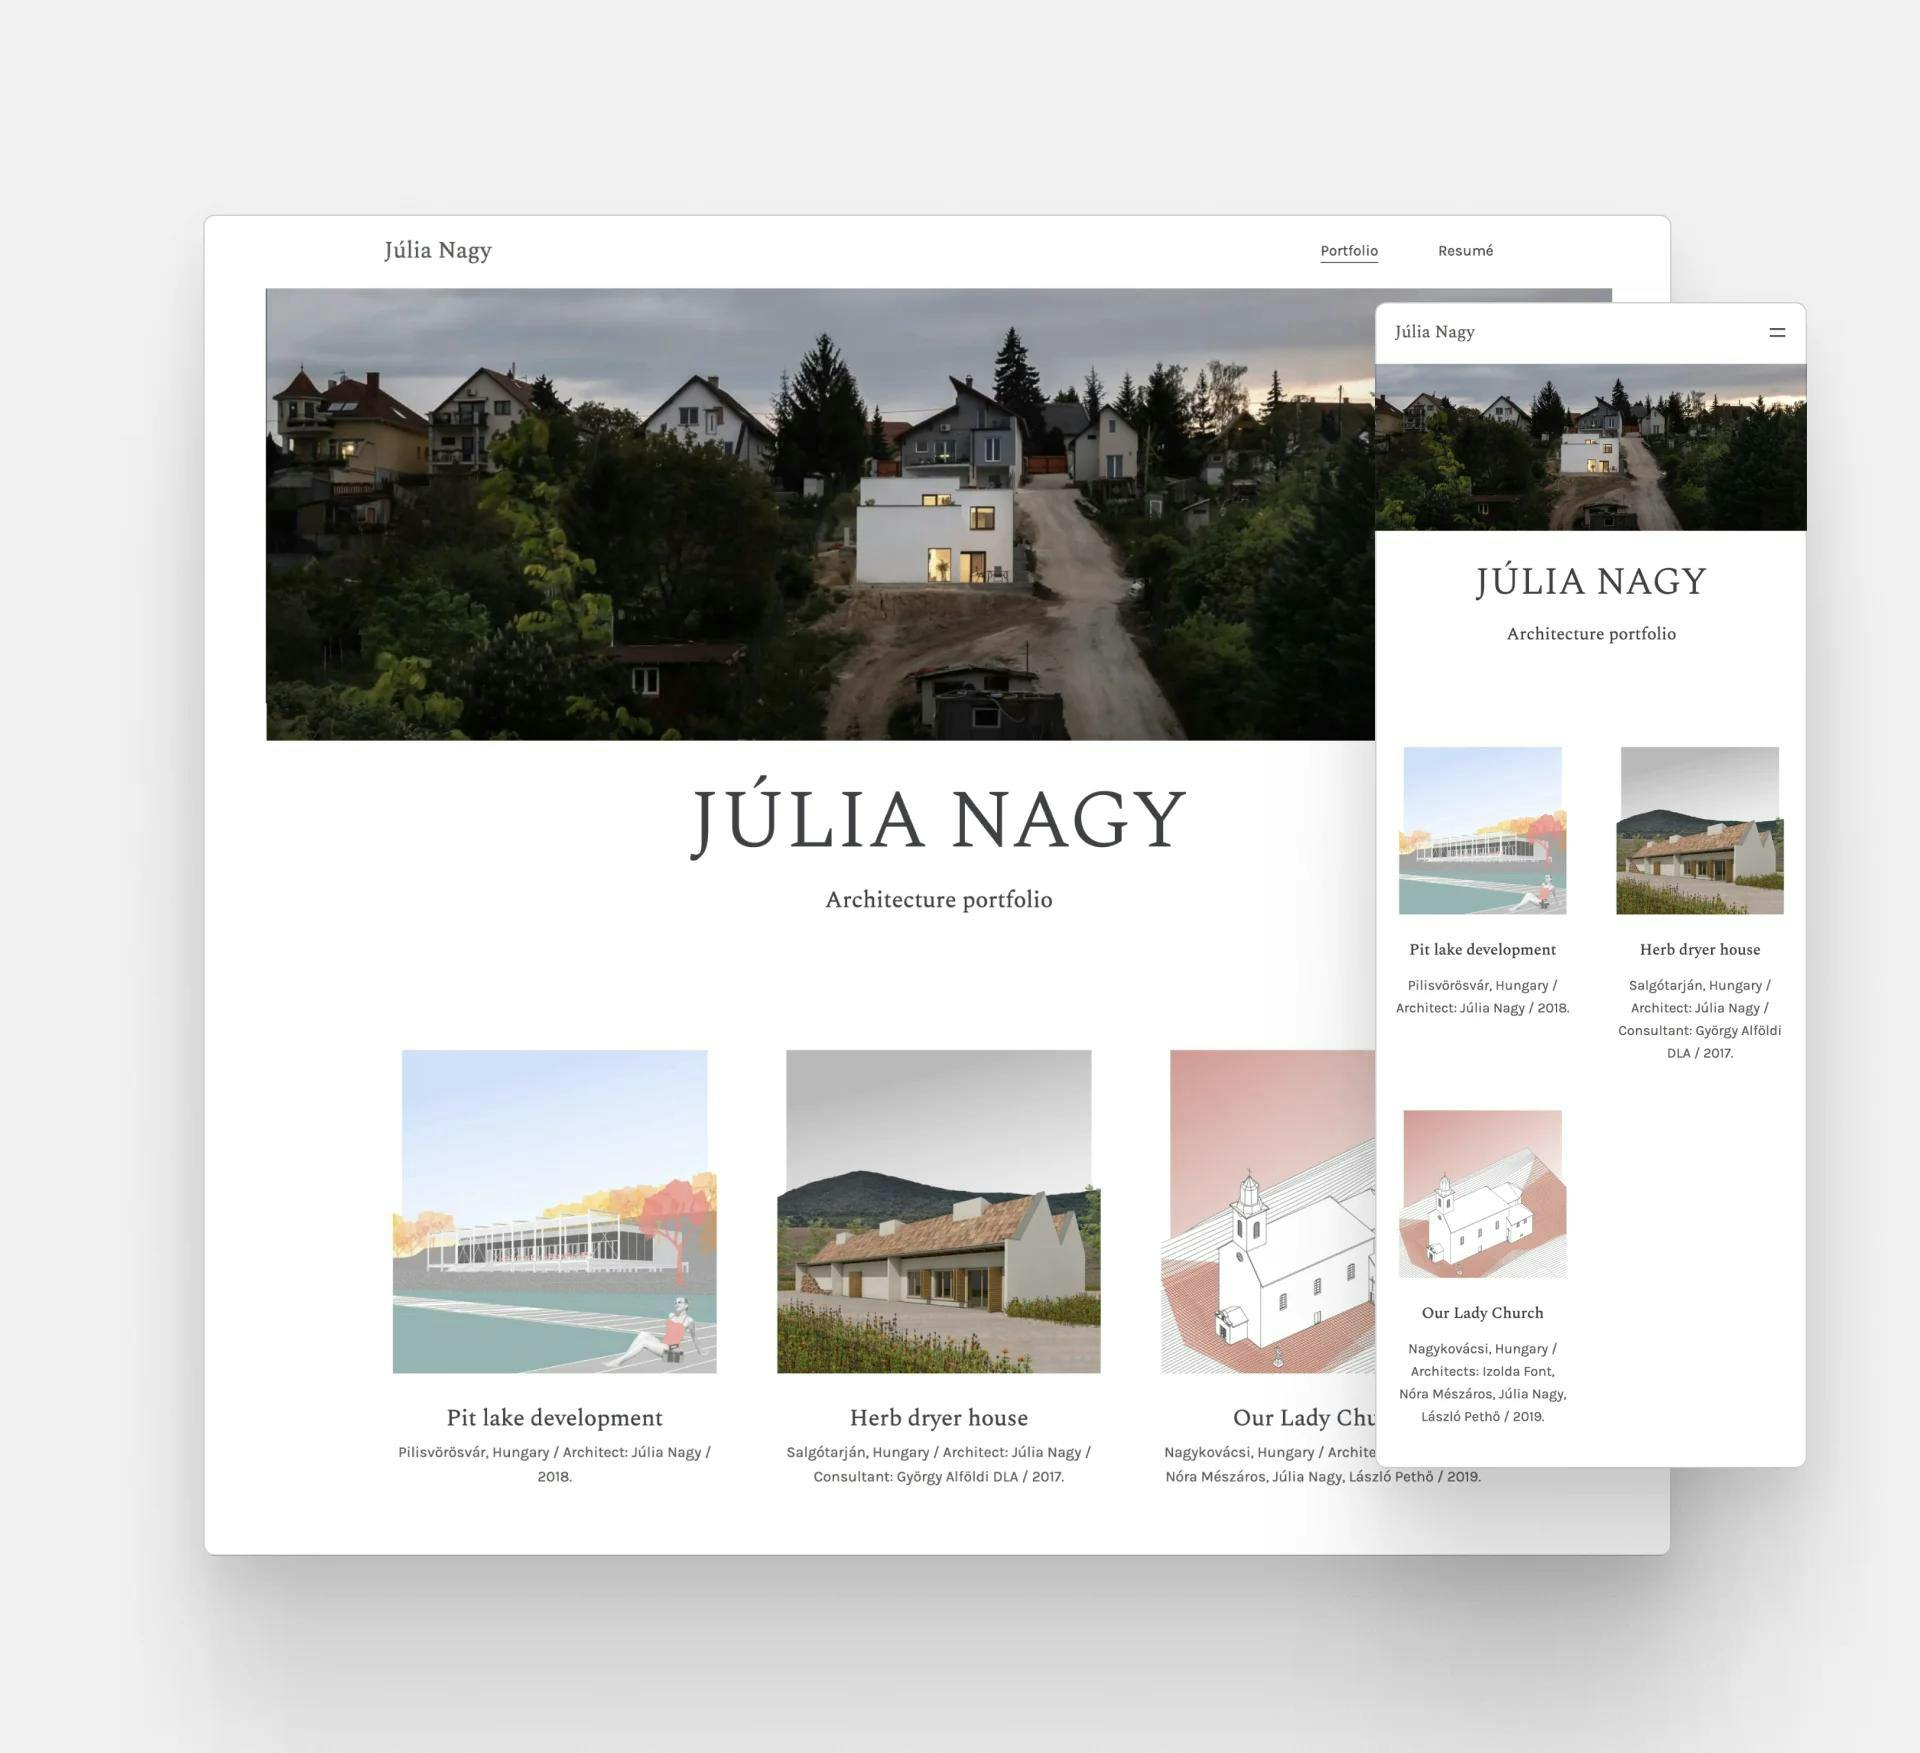 A website of Júlia Nagy's portfolio in a desktop and a mobile screenshot as well